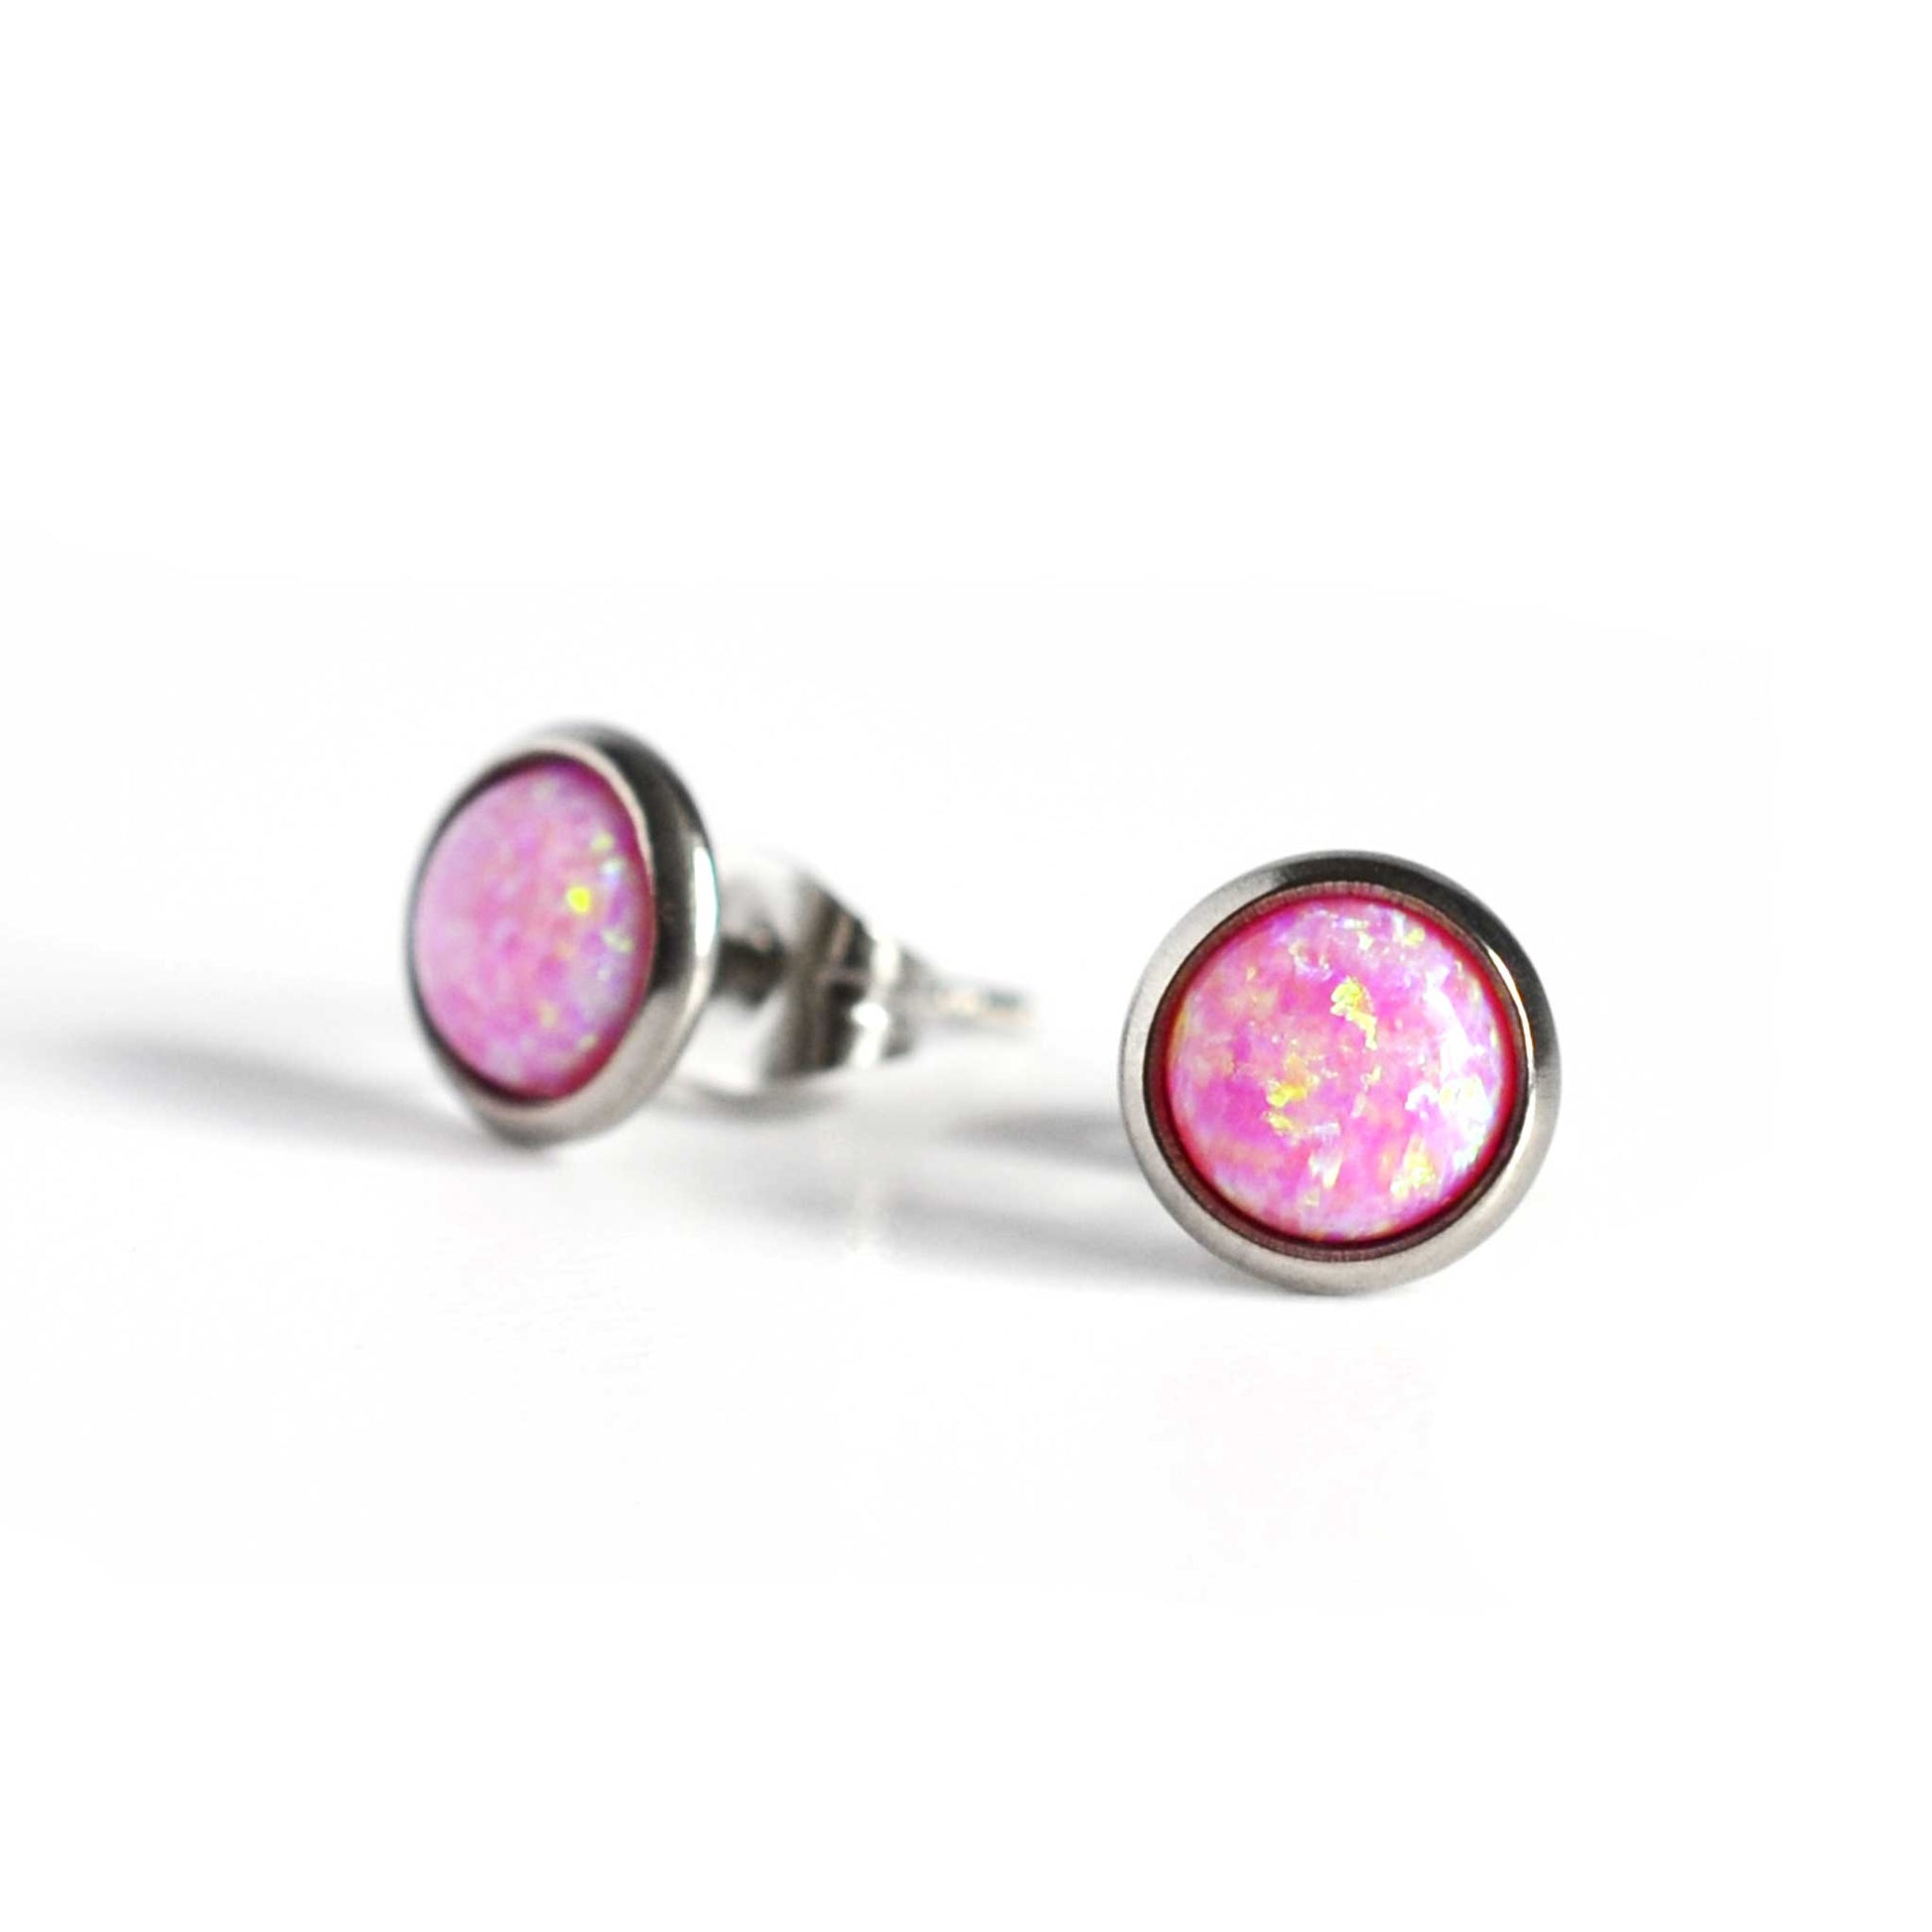 Pink Opal gemstone stud earrings on white background